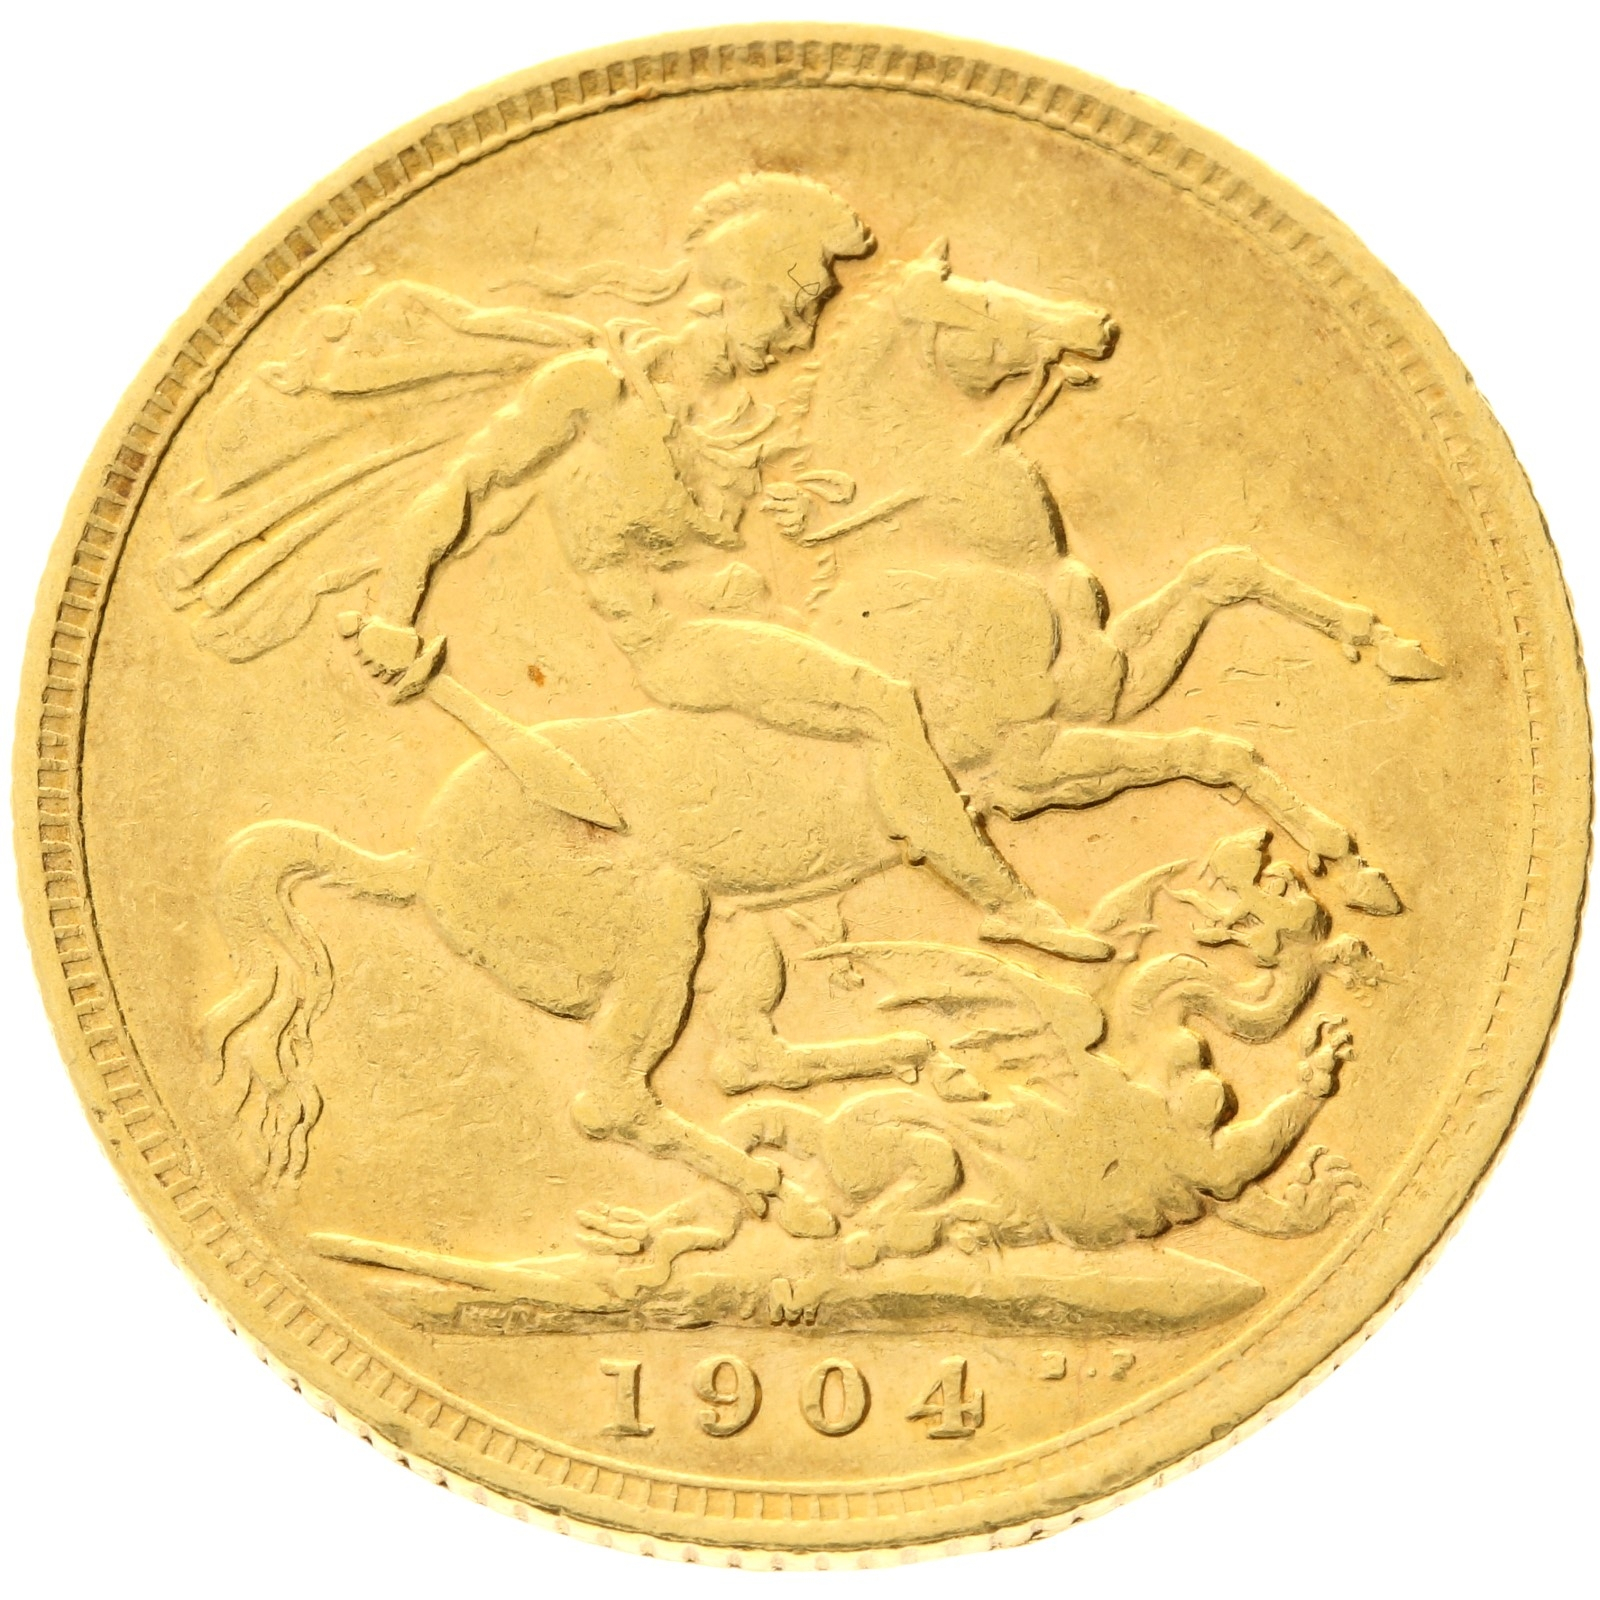 Australia - 1 Sovereign - 1904 - M - Edward VII 